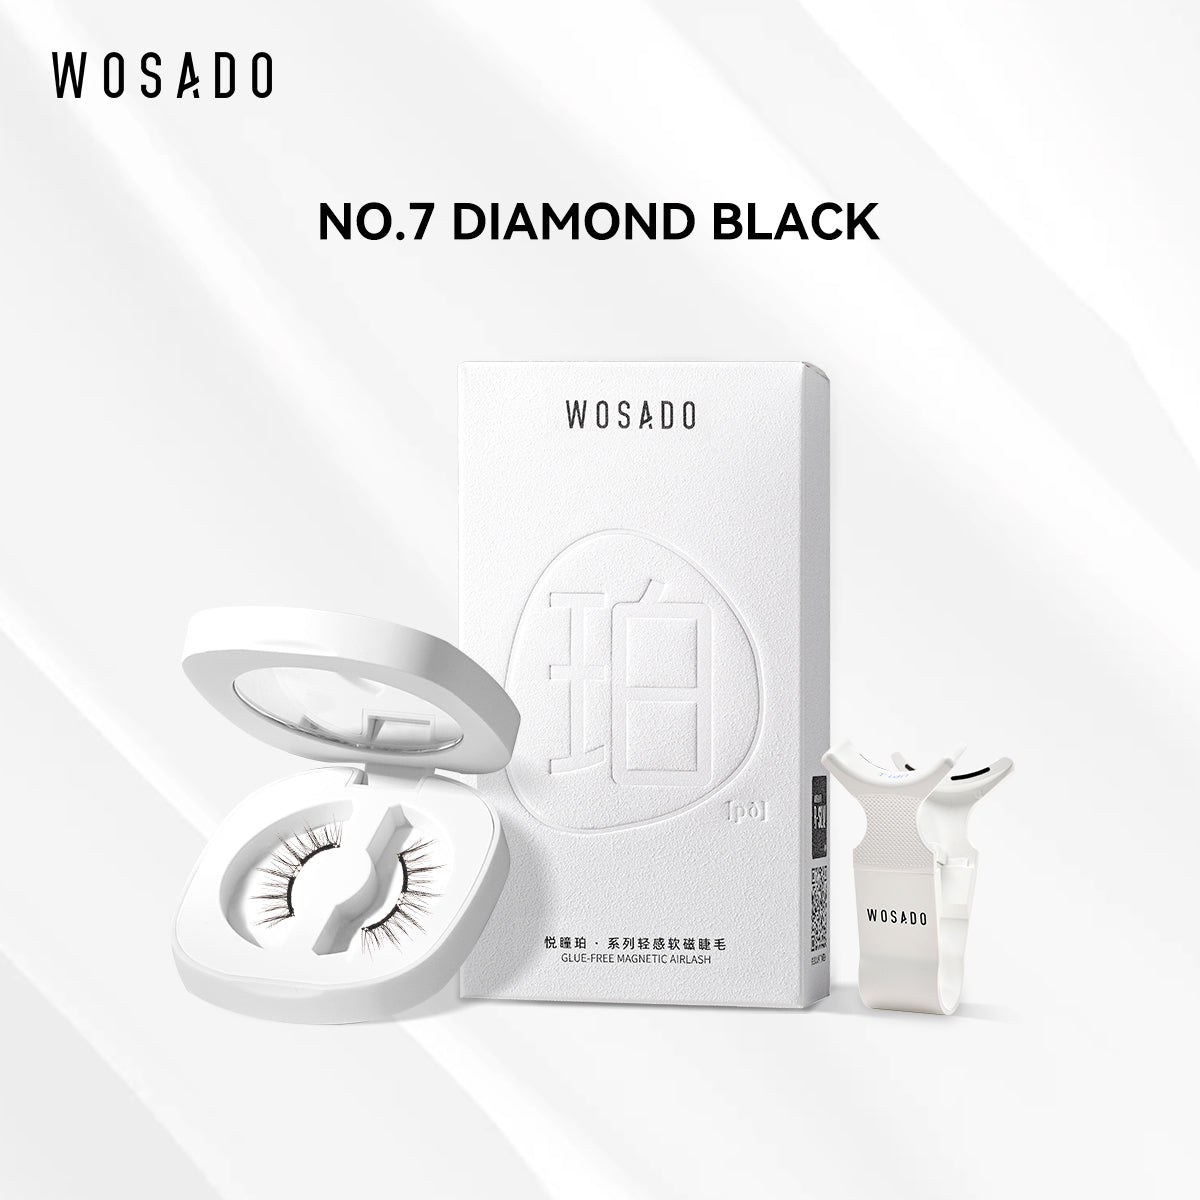 【WOSADO】NO.7 Diamond Black